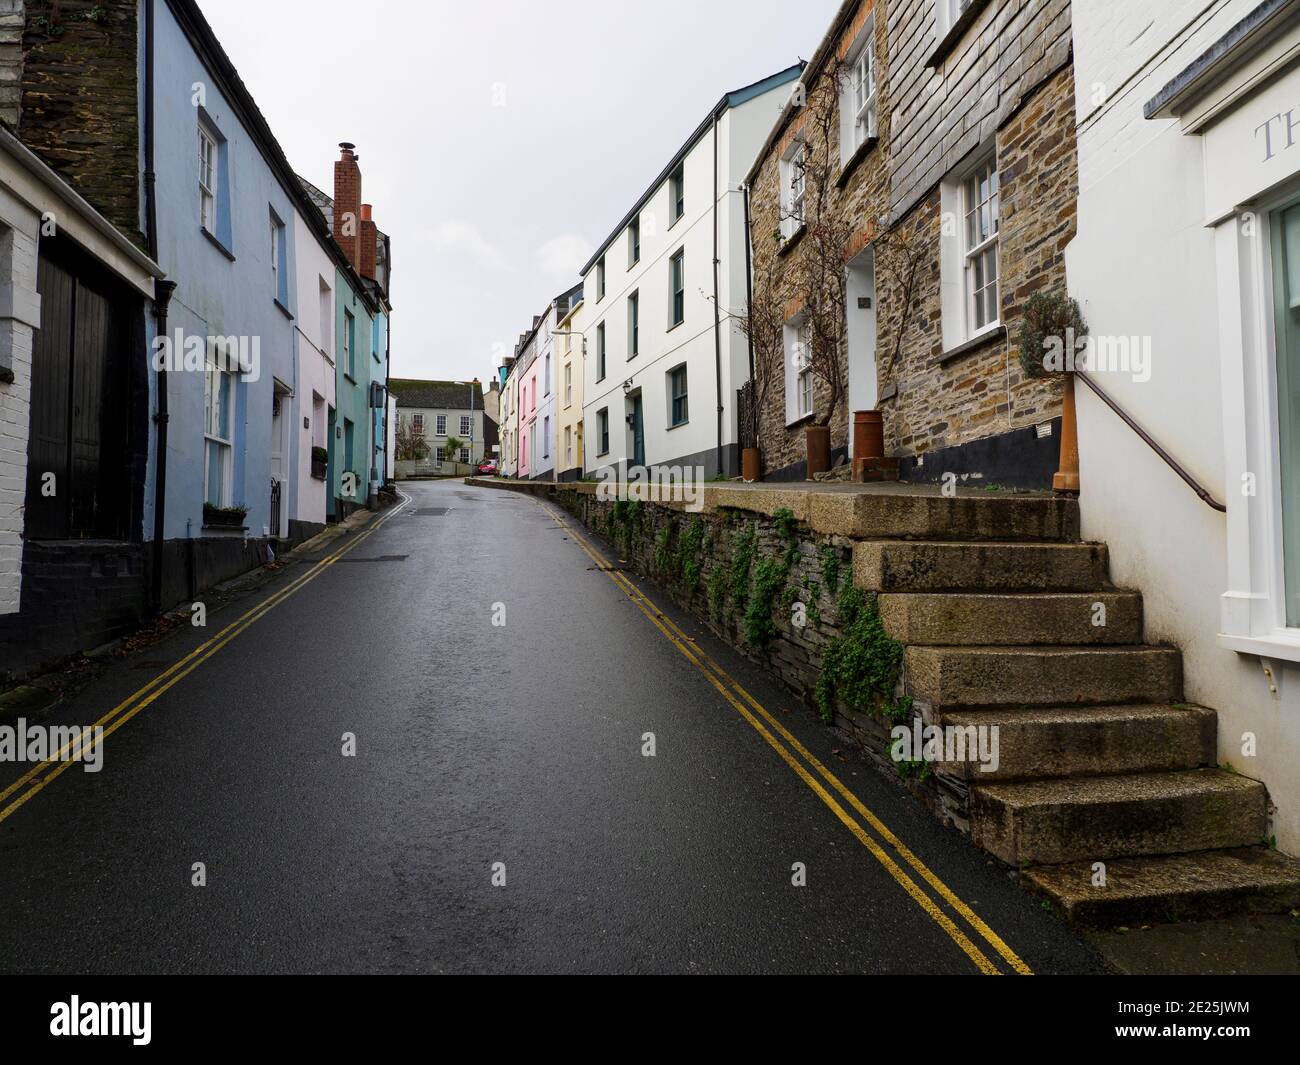 Narrow street of terraced houses, Padstow, Cornwall, UK Stock Photo